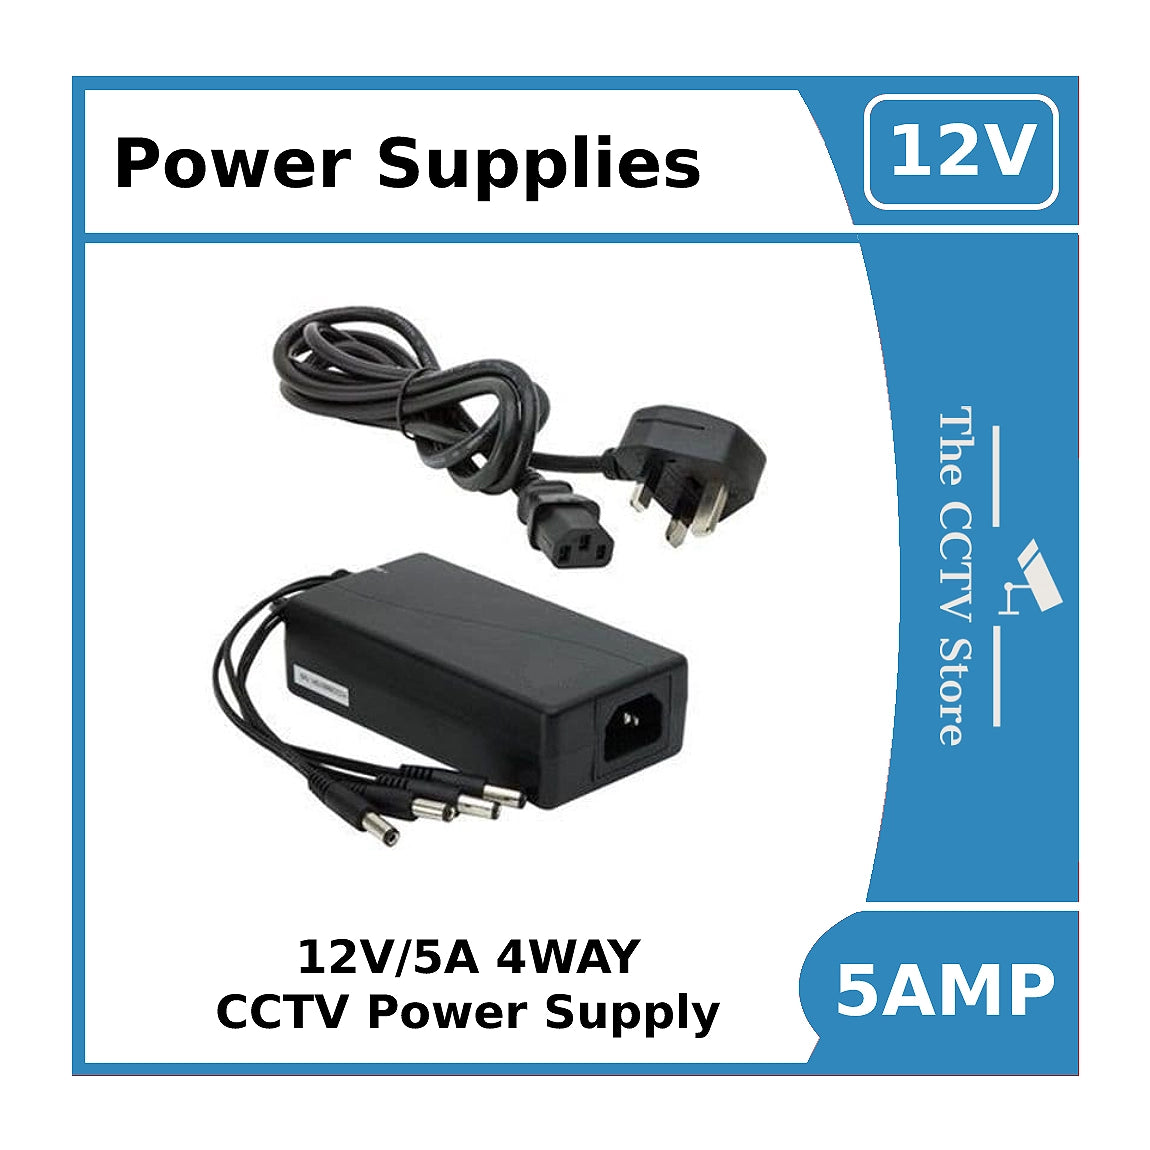 Power Supply 12V/5A 4 Way for CCTV Cameras -12vDC Power Supply 5amp 4 Way